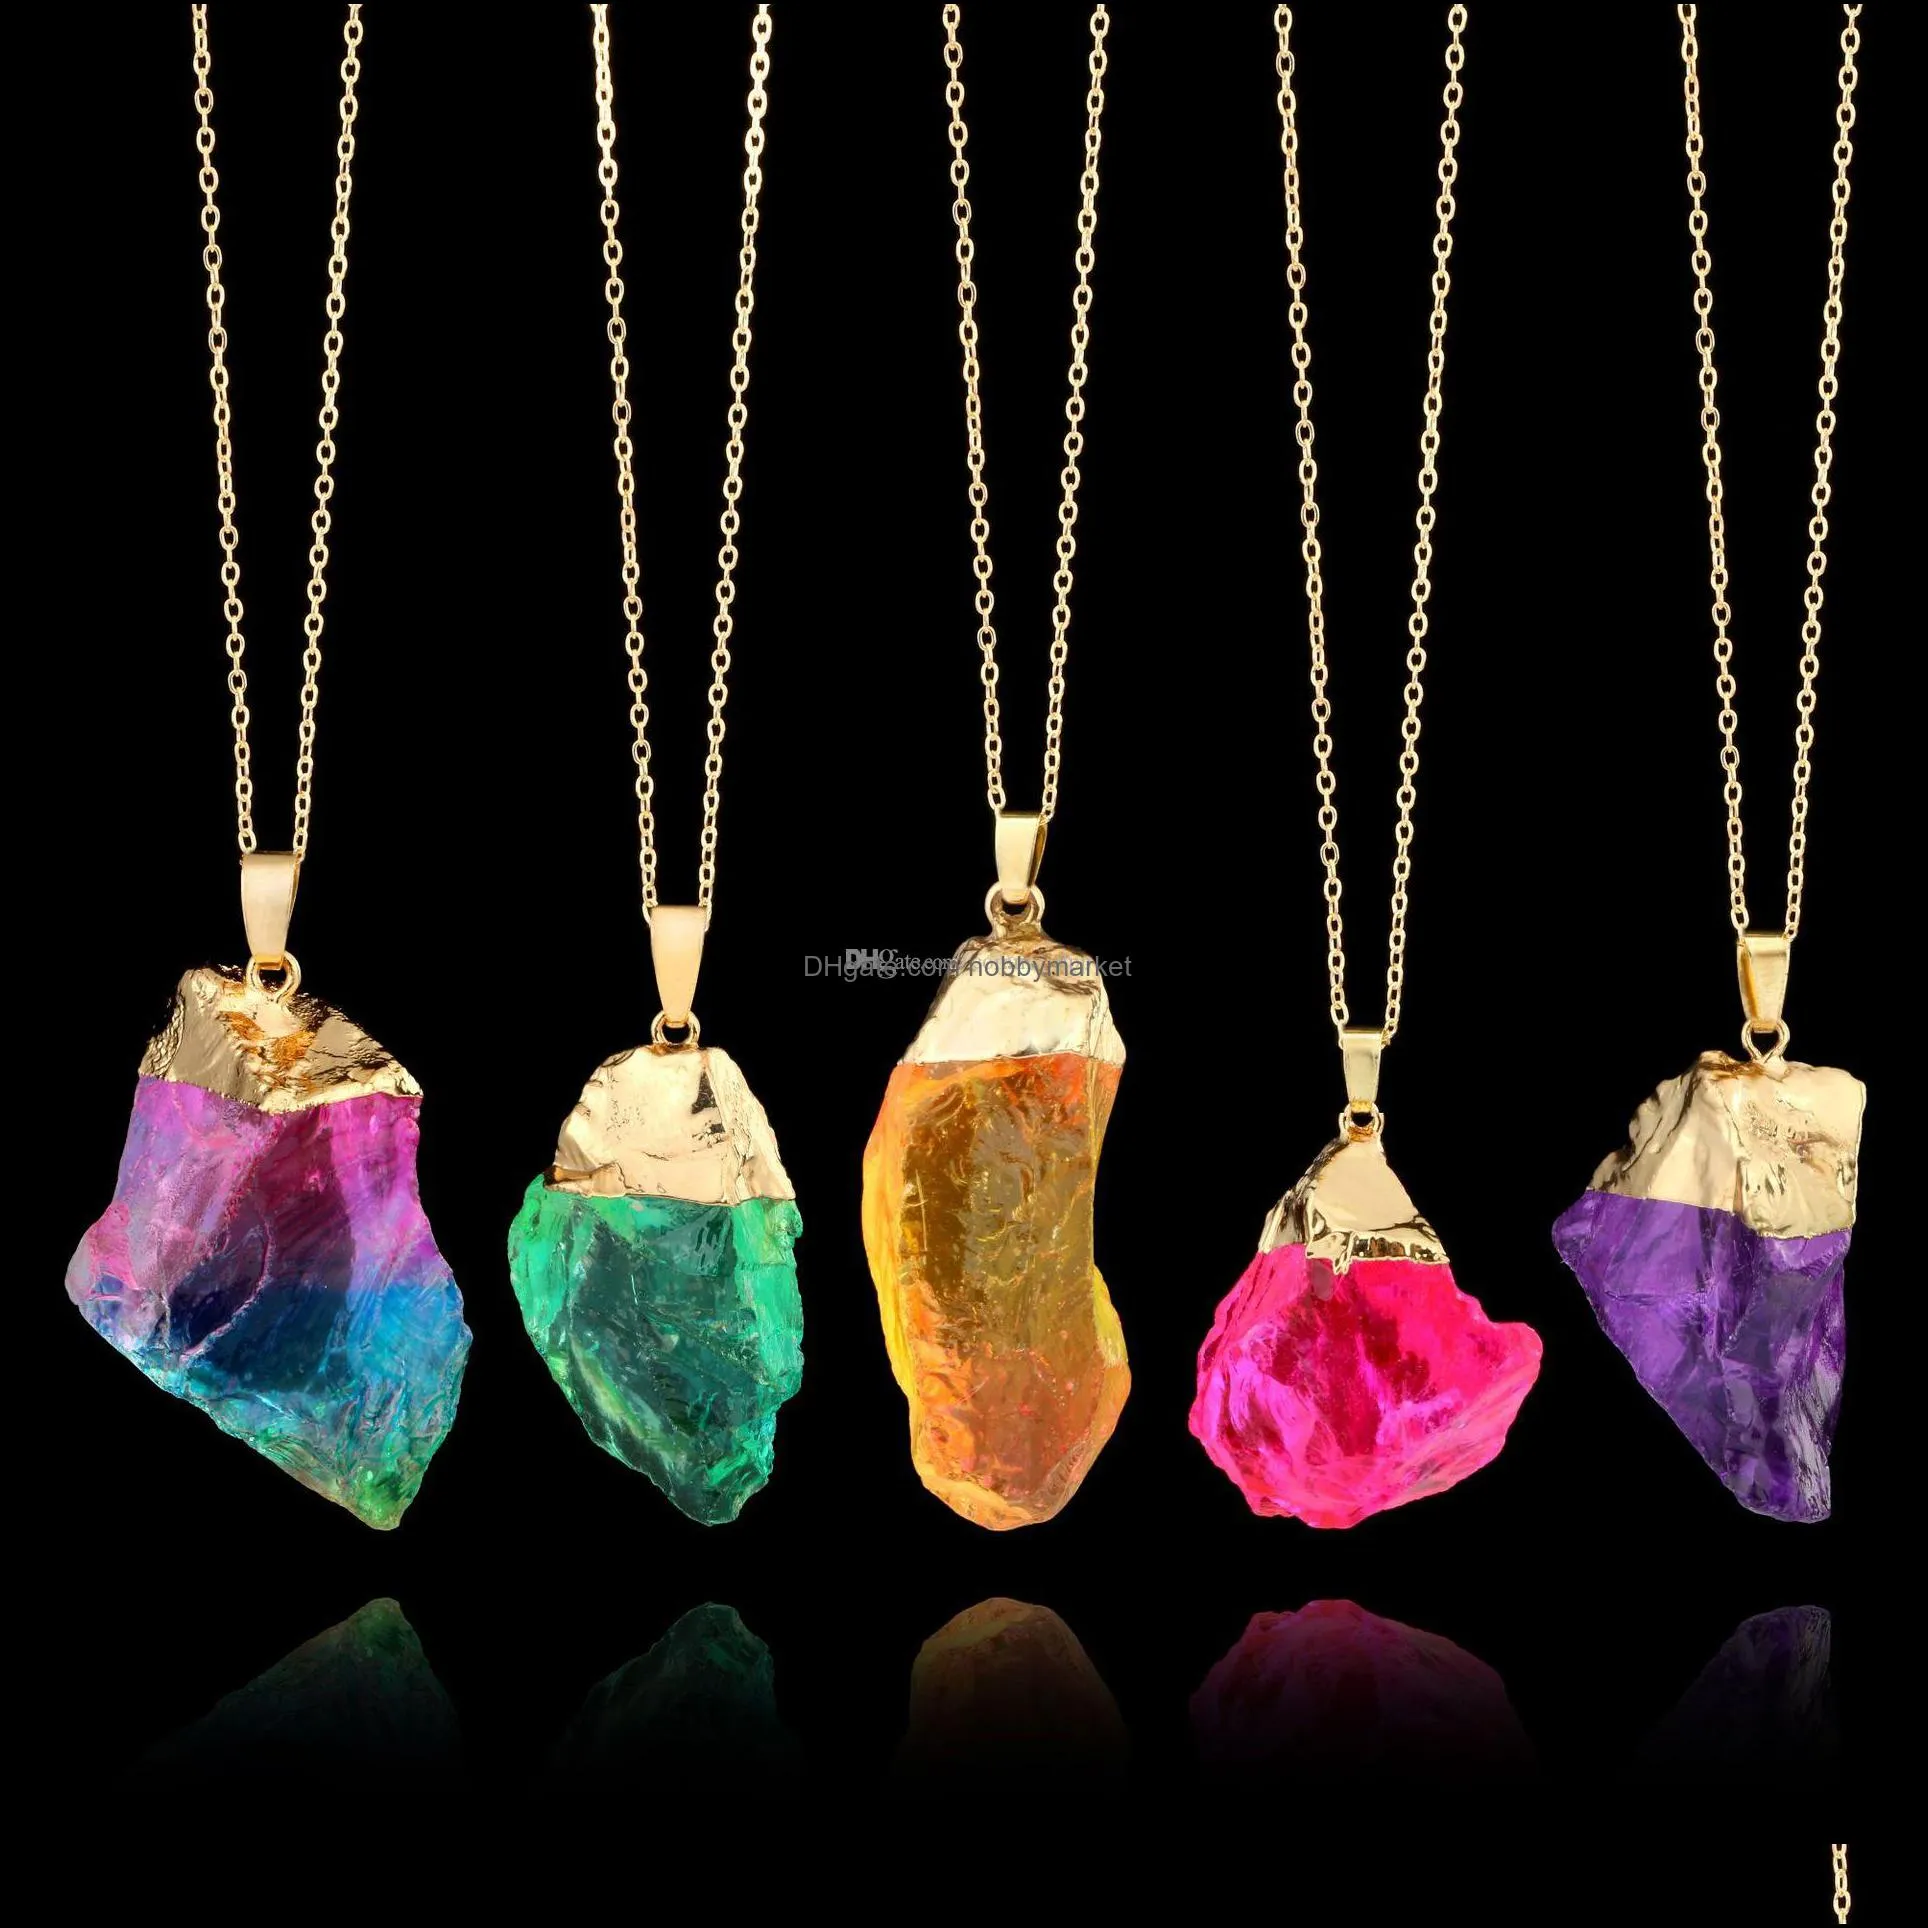 Pendant Necklaces & Pendants Jewelry Luxury Quartz Natural Stone Irregar Crystal Druzy Healing Gemstone Gold Chain Necklace For Women S Drop